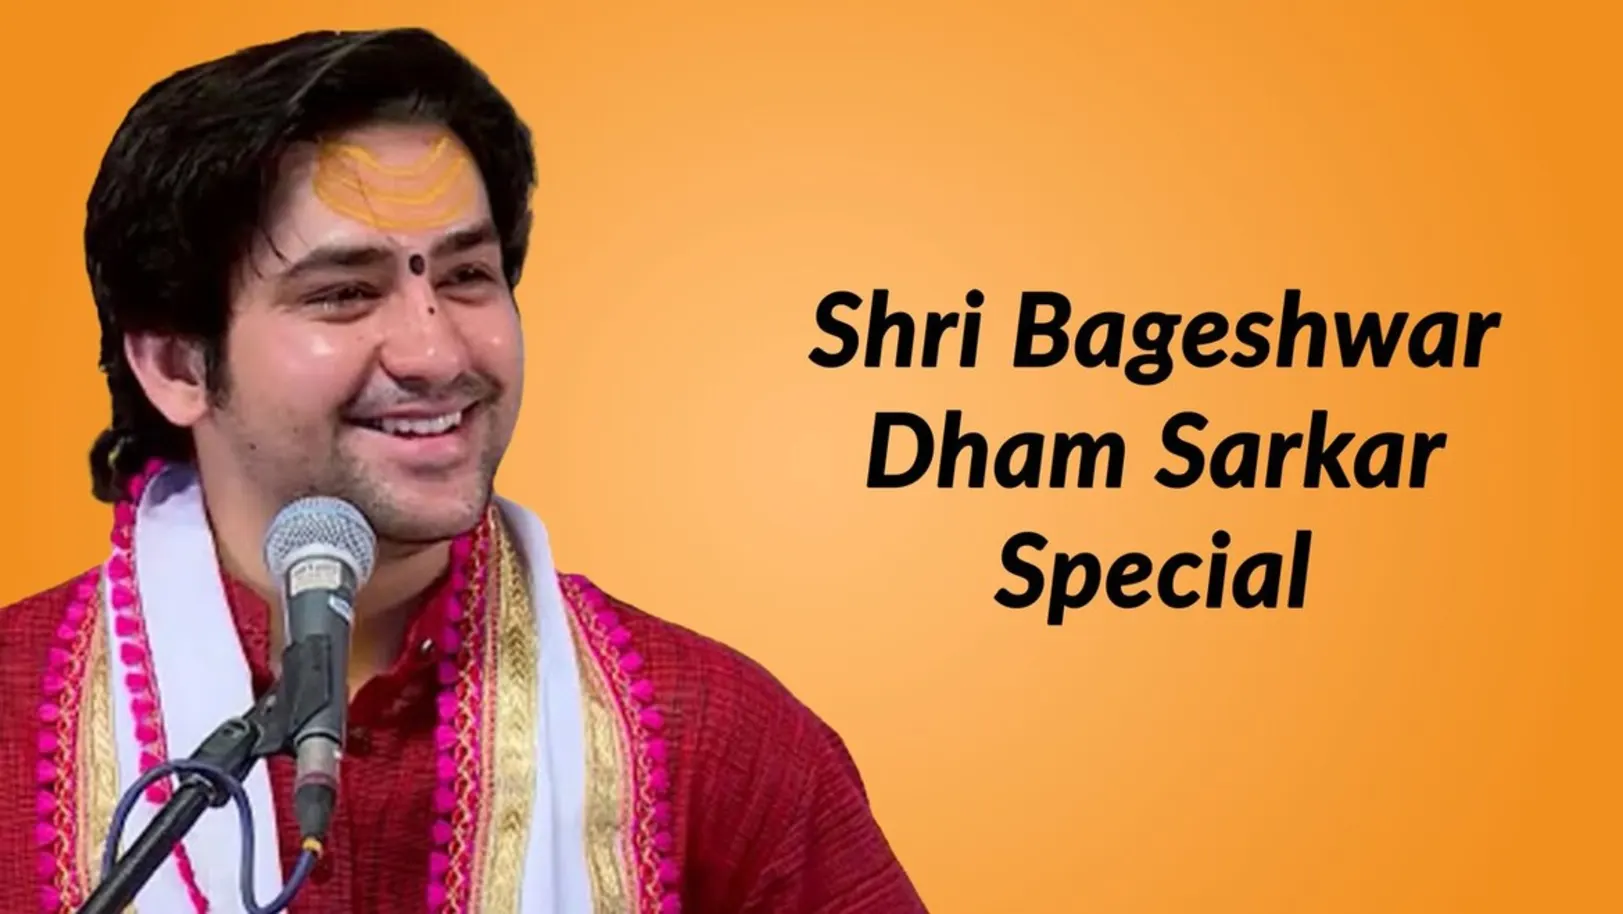 Shri Bageshwar Dham Sarkar Special Streaming Now On Sanskar TV